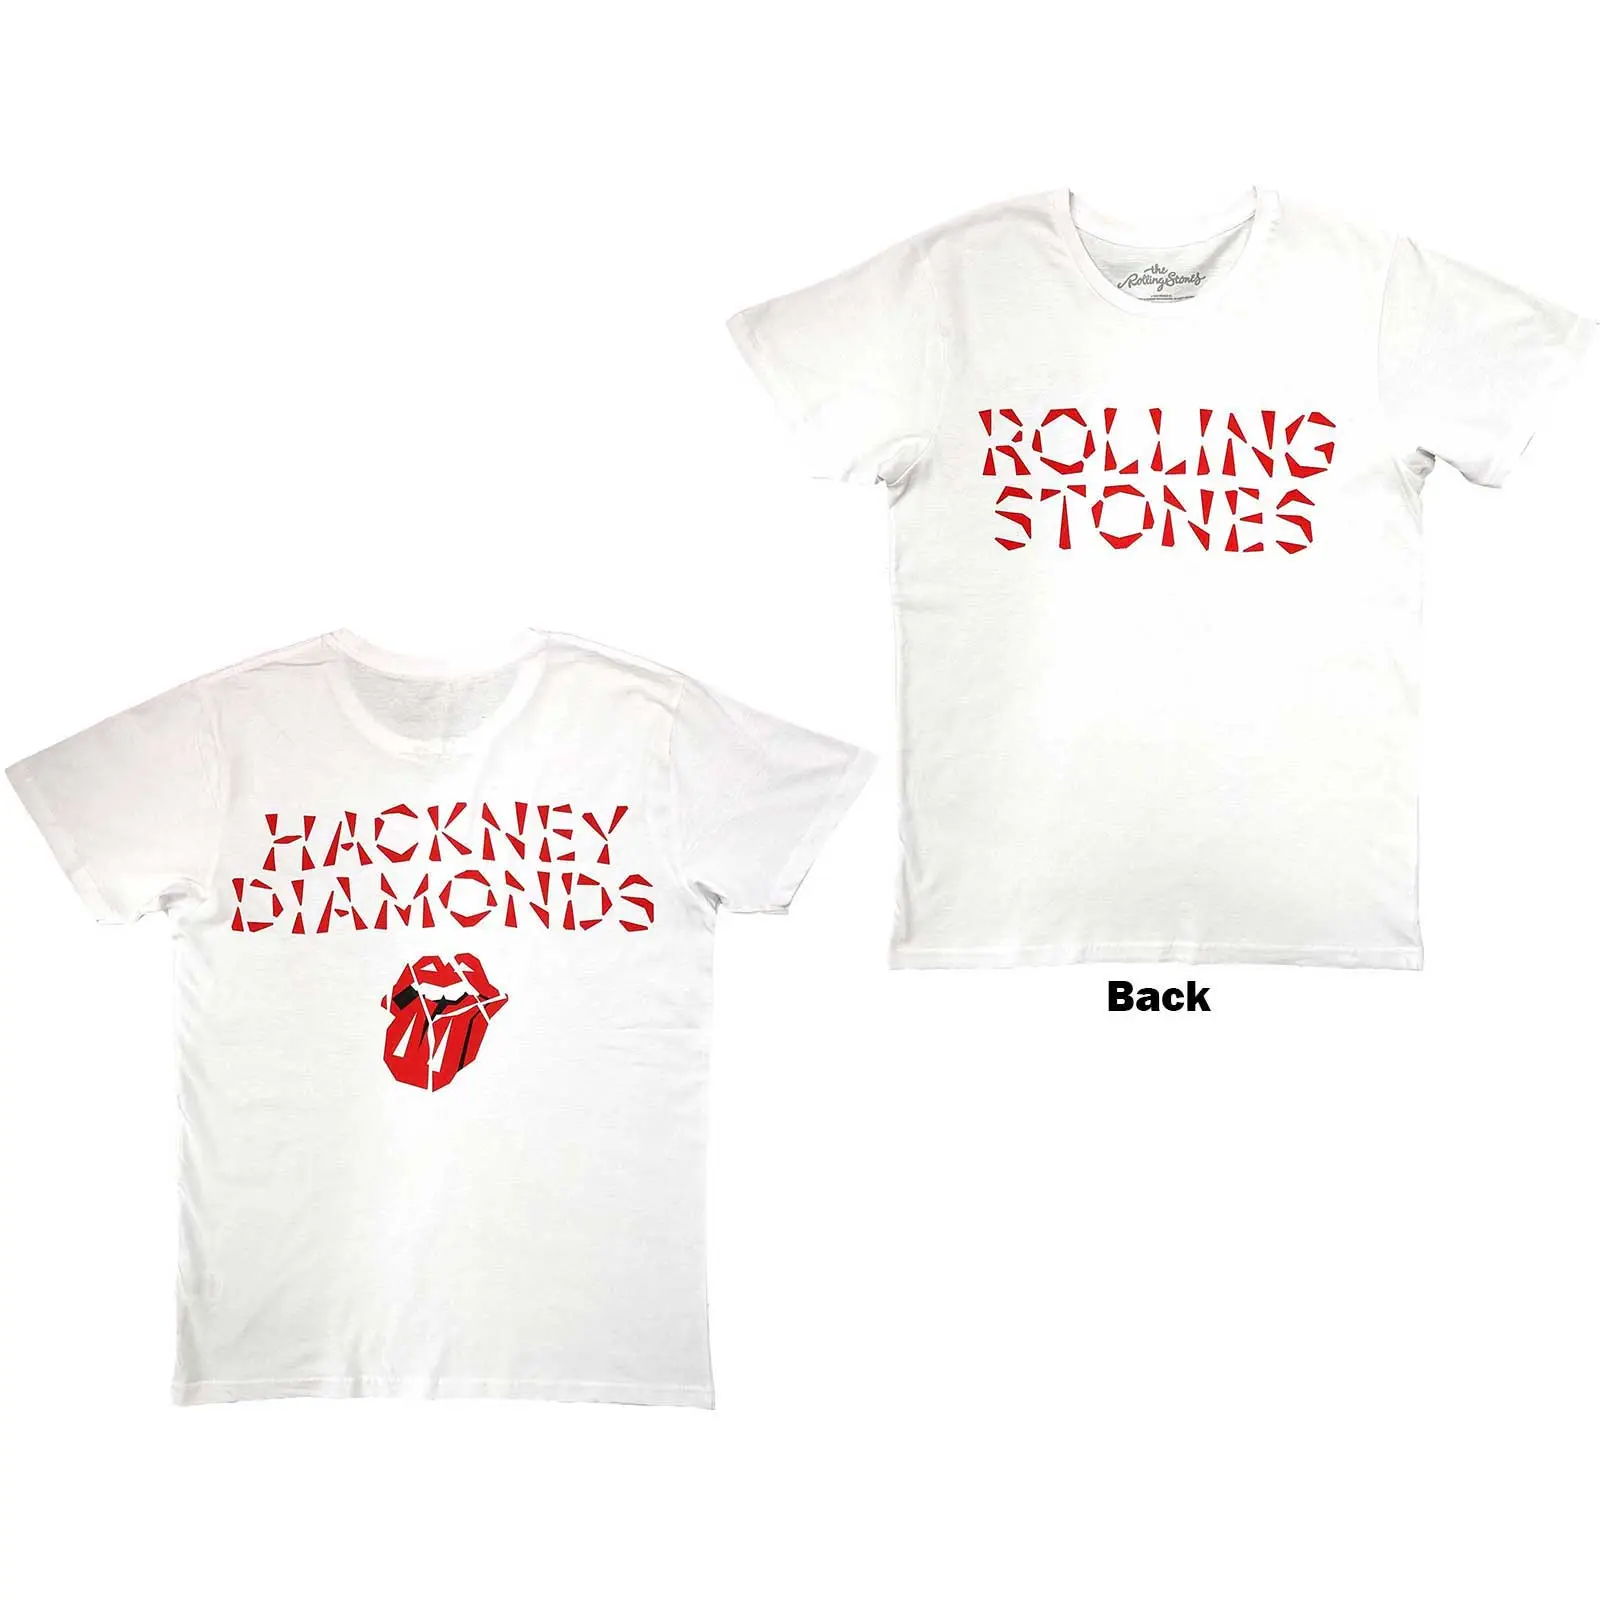 The Rolling Stones - The Rolling Stones Unisex T-Shirt: Hackney Diamonds (Back Print)  Hackney Diamonds Short Sleeves artwork